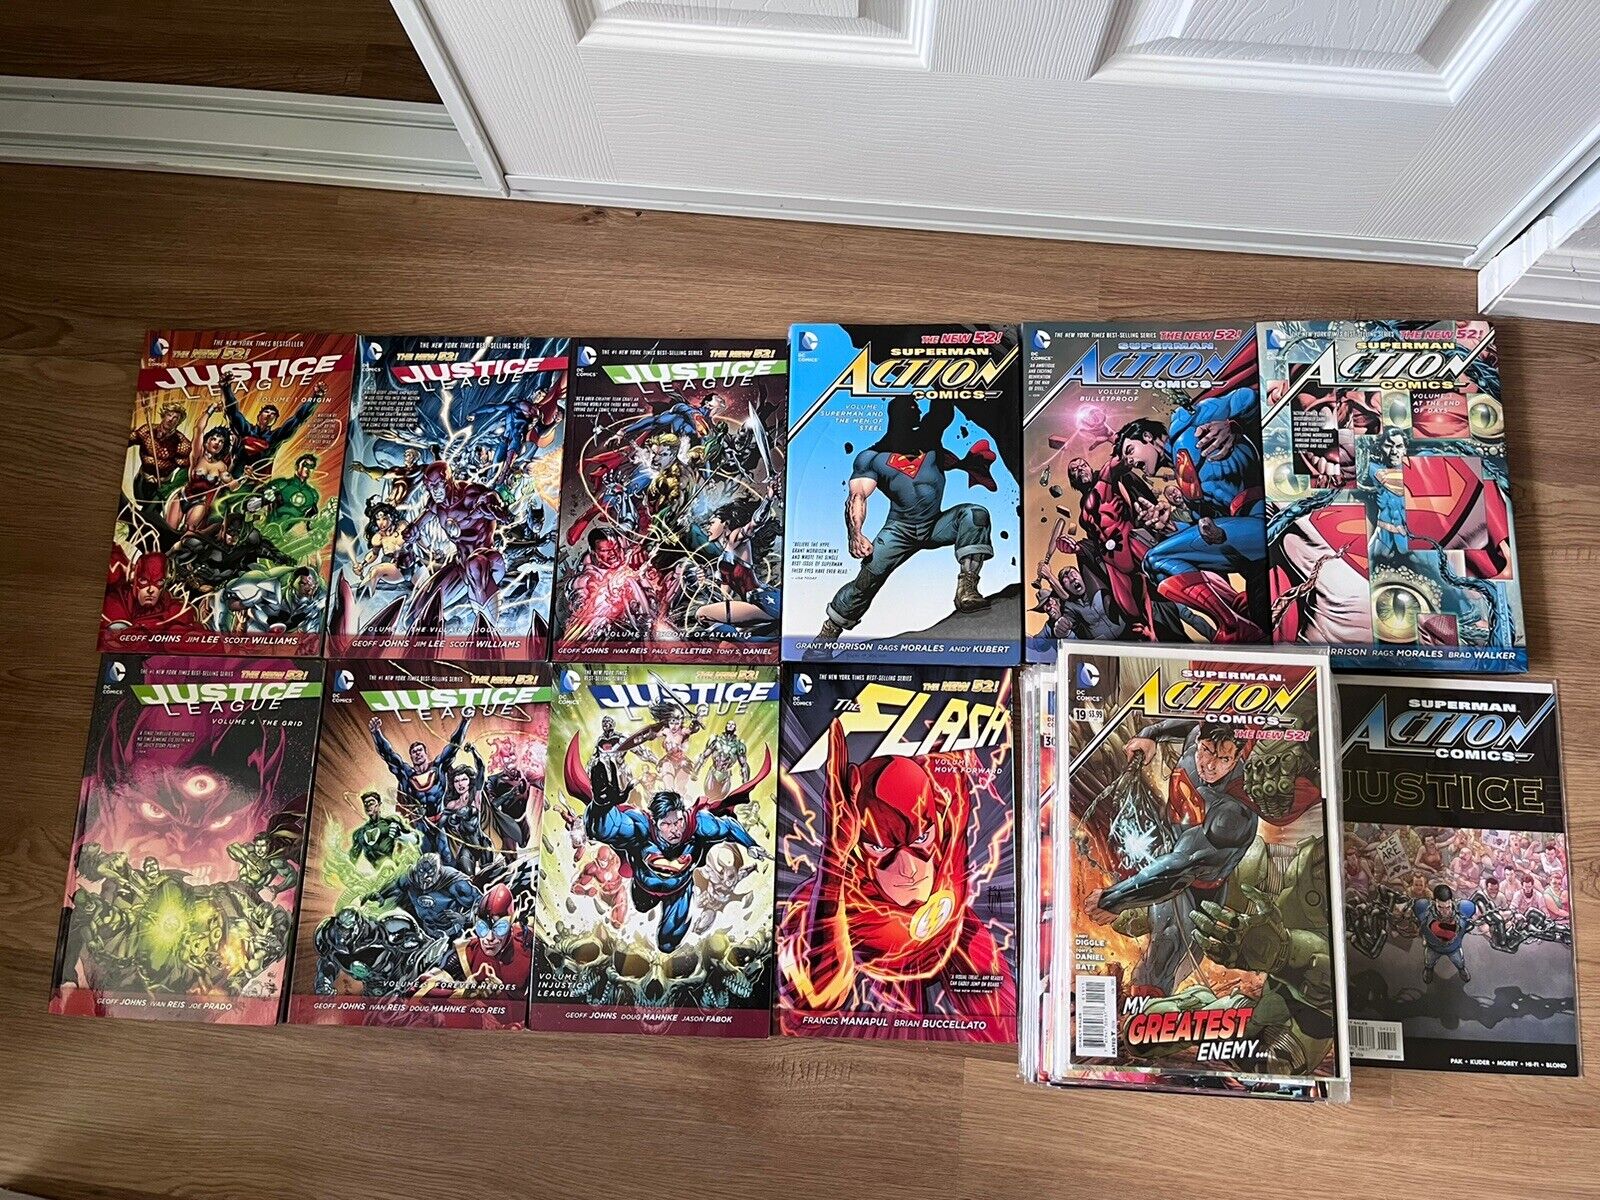 New 52 DC comics (Justice League, Action Comics, The Flash)